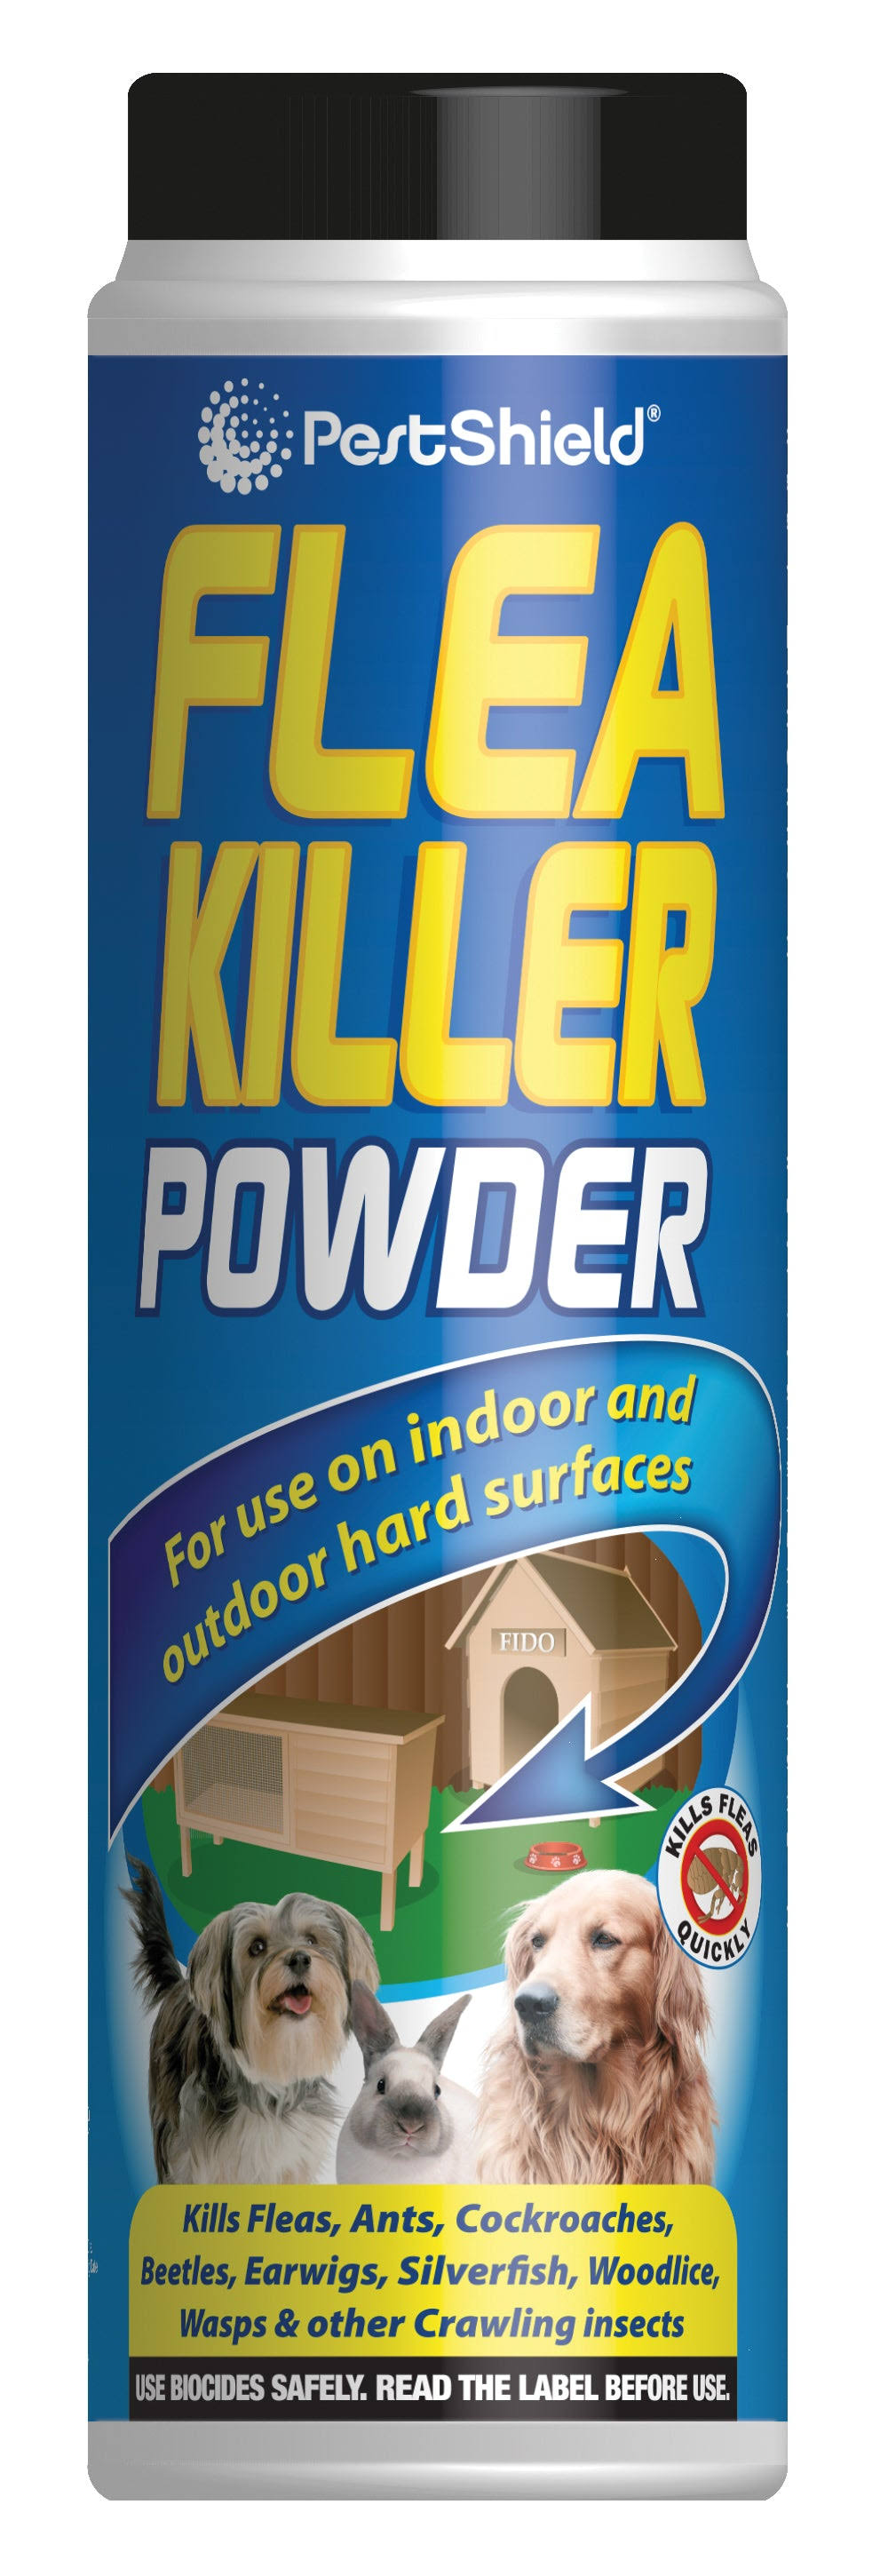 PestShield Flea Killer Powder Crawling Insect Killer Indoor & Outdoor 200g